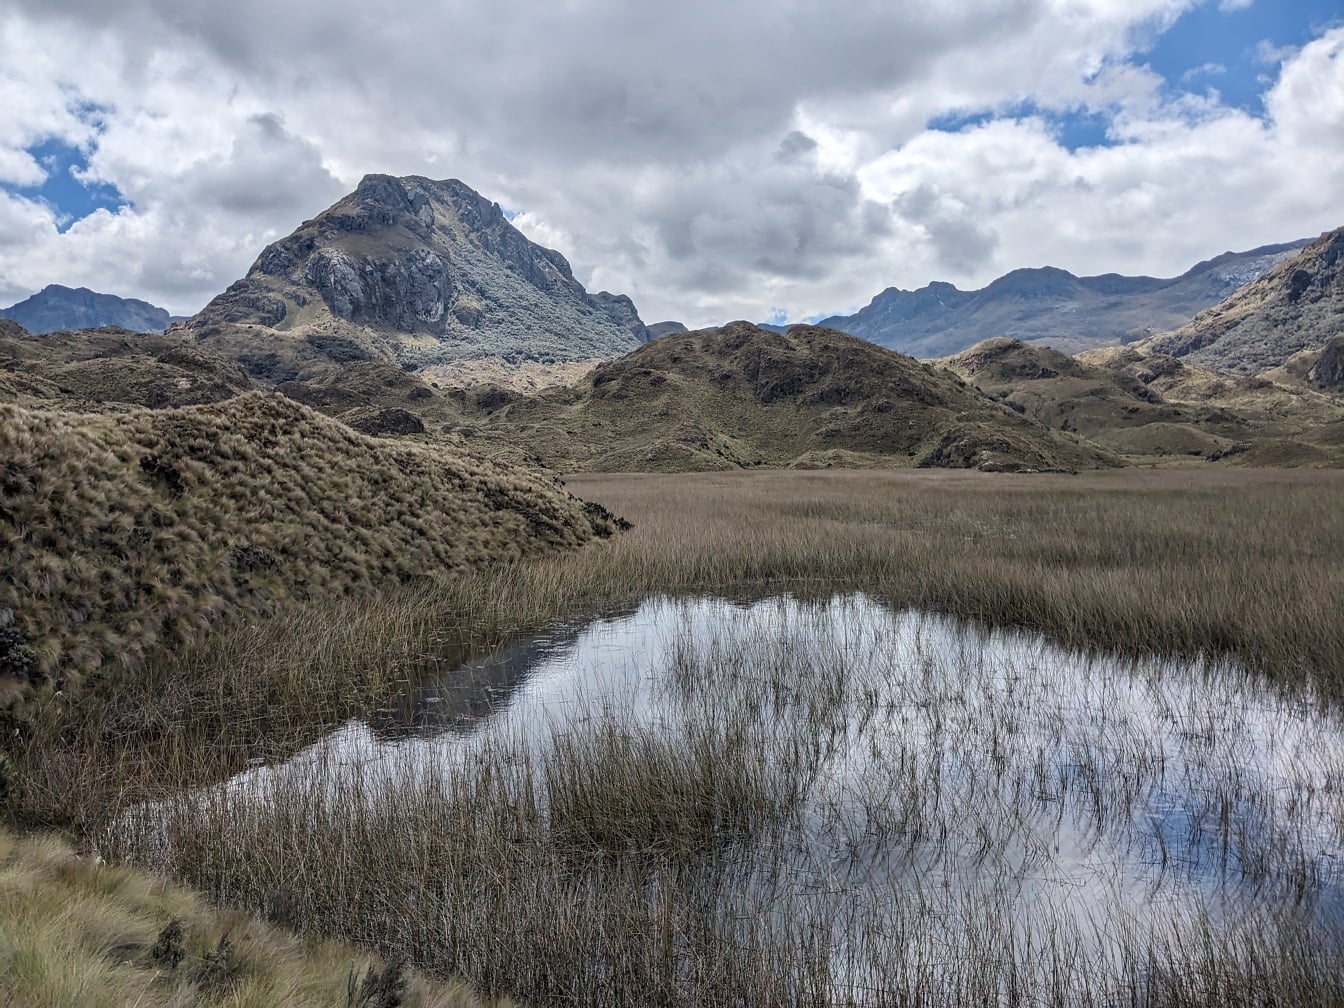 Vand i et græsareal i bjergene i nationalparken i Ecuador